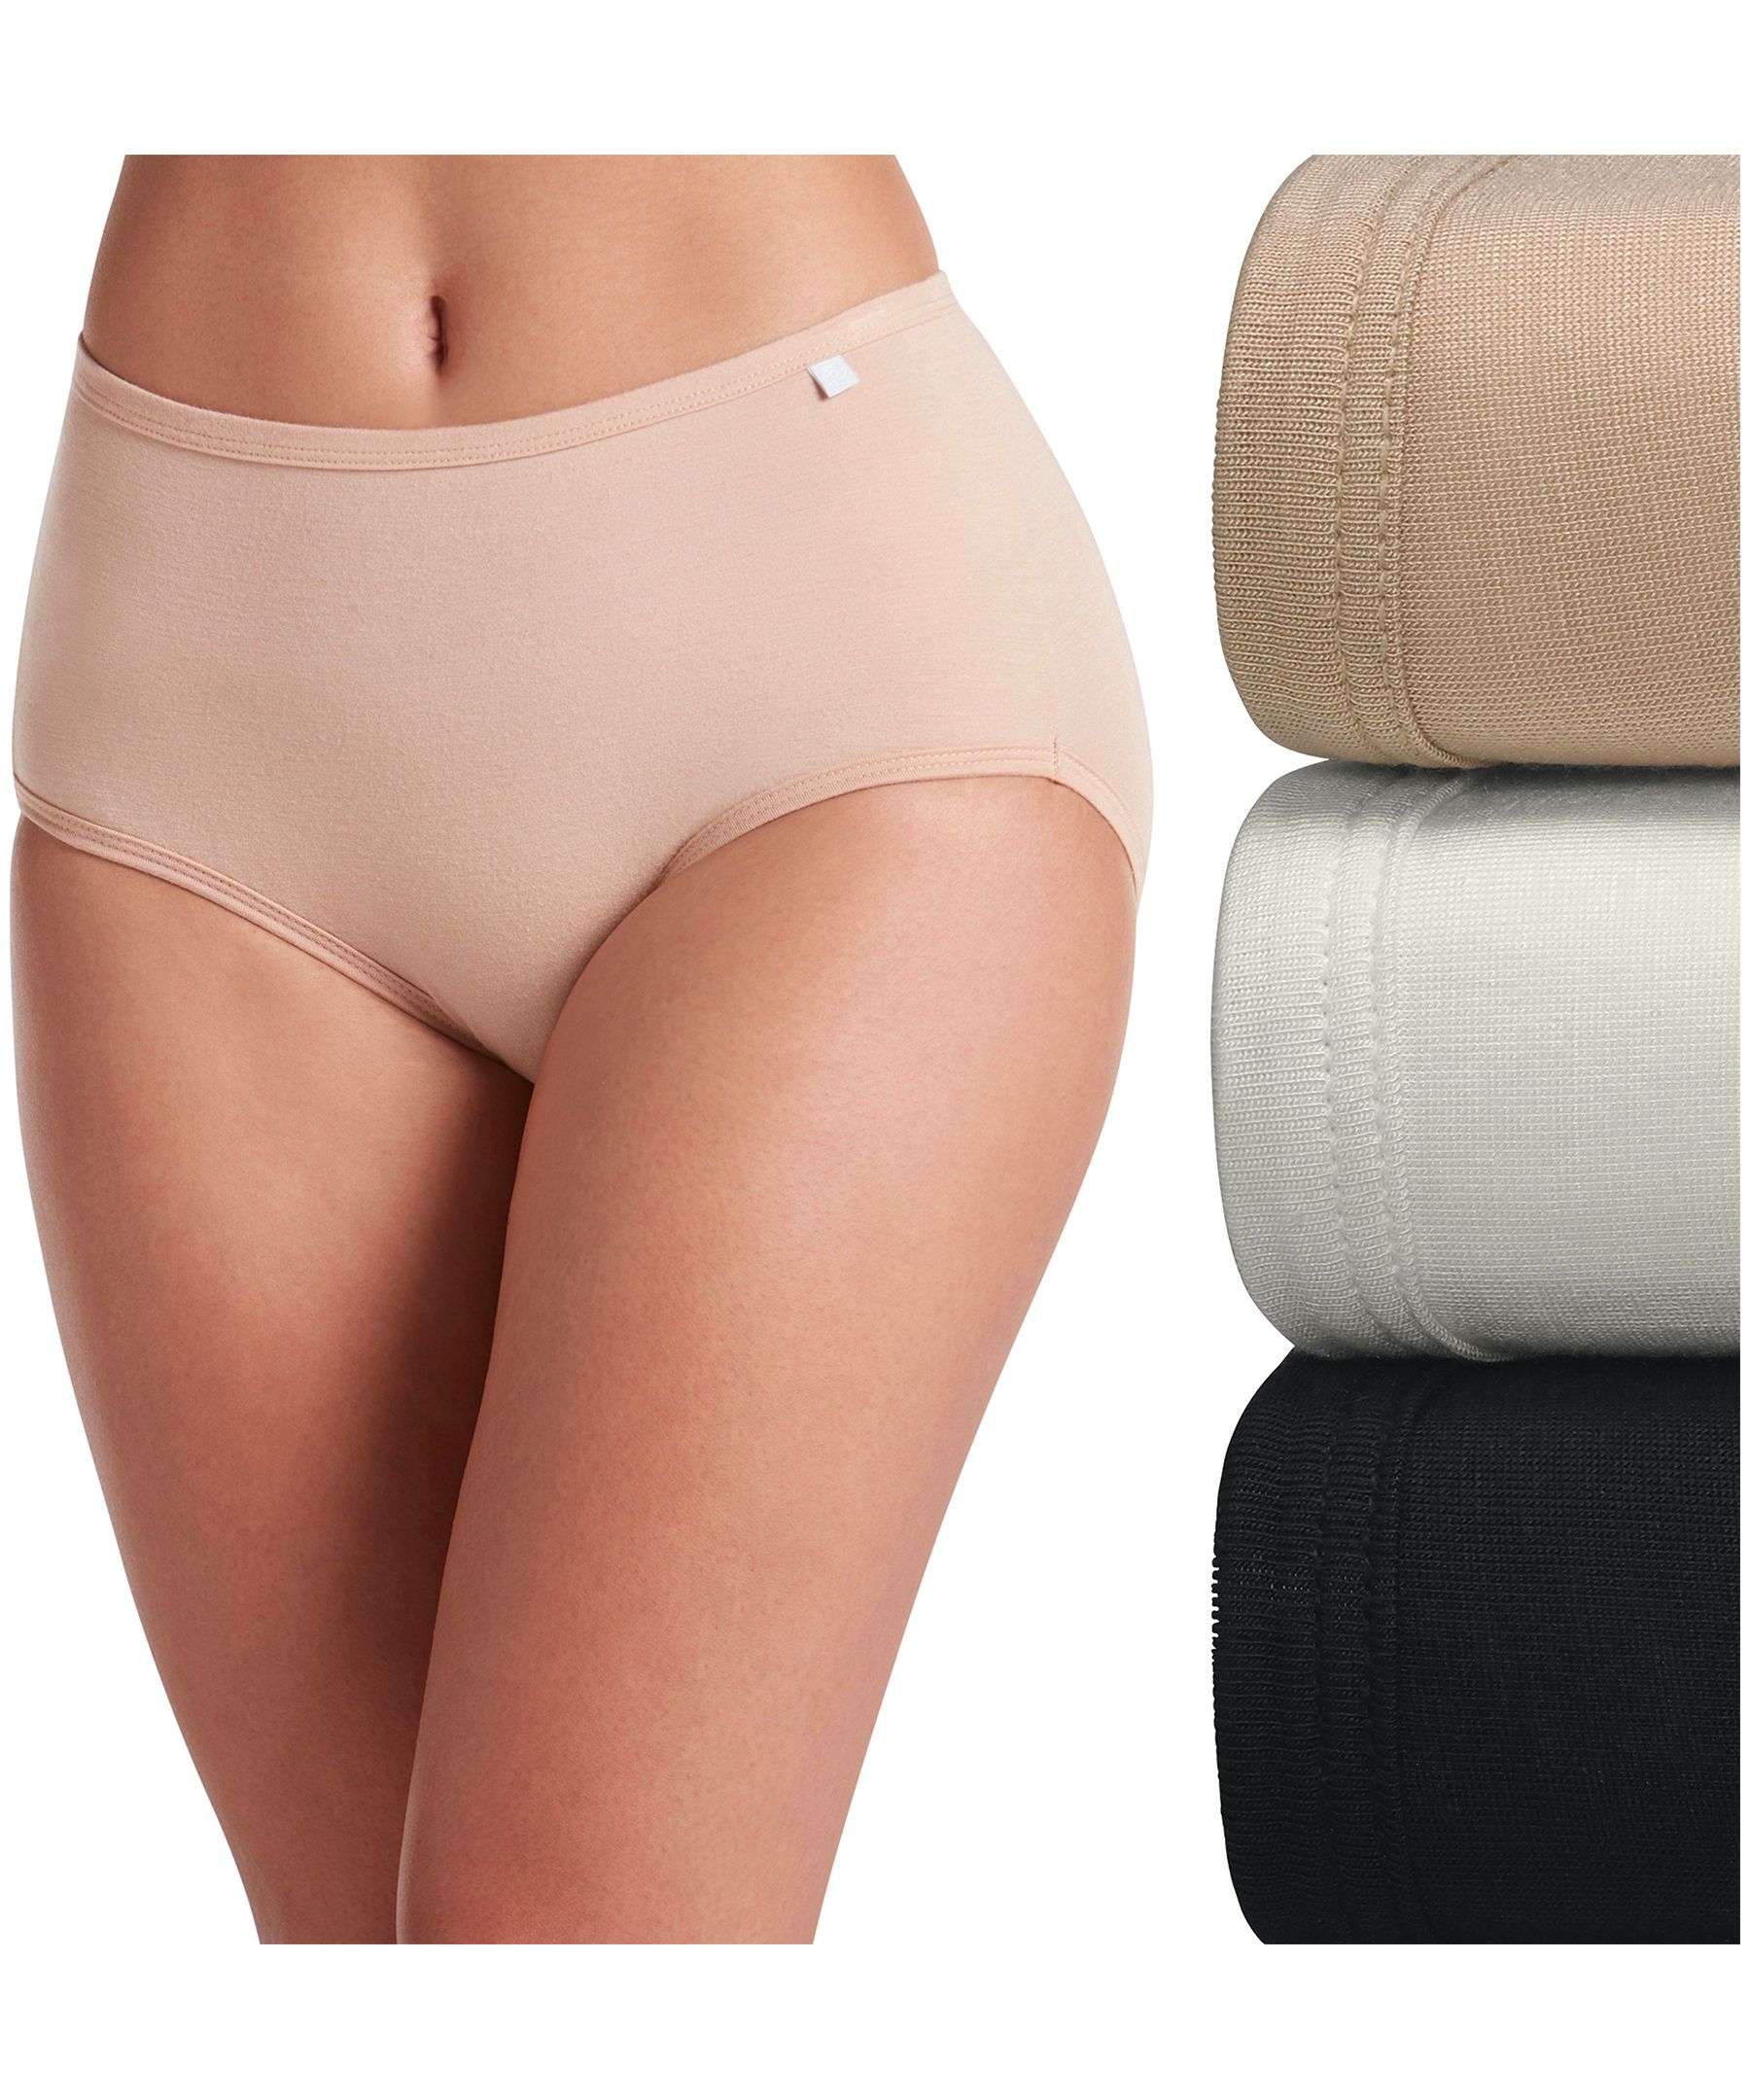 ICCLEK Soft Cotton Cup Front Zipper Middle Aged Underwear Ladies